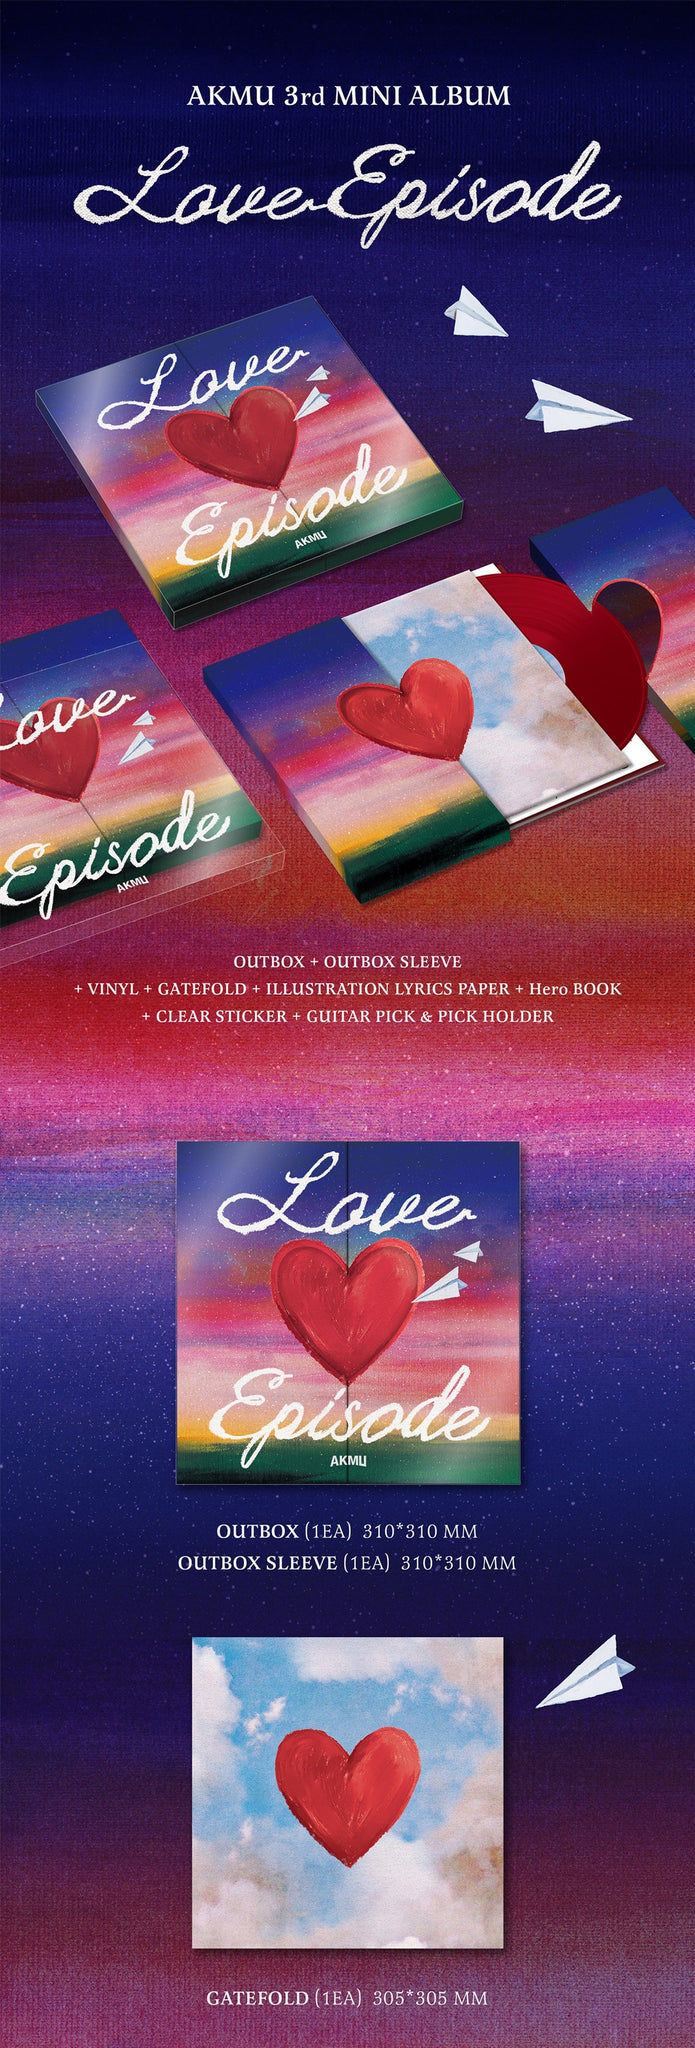 AKMU 3rd Mini Album LOVE EPISODE - Vinyl LP Inclusions: Out Box & Sleeve, Gatefold